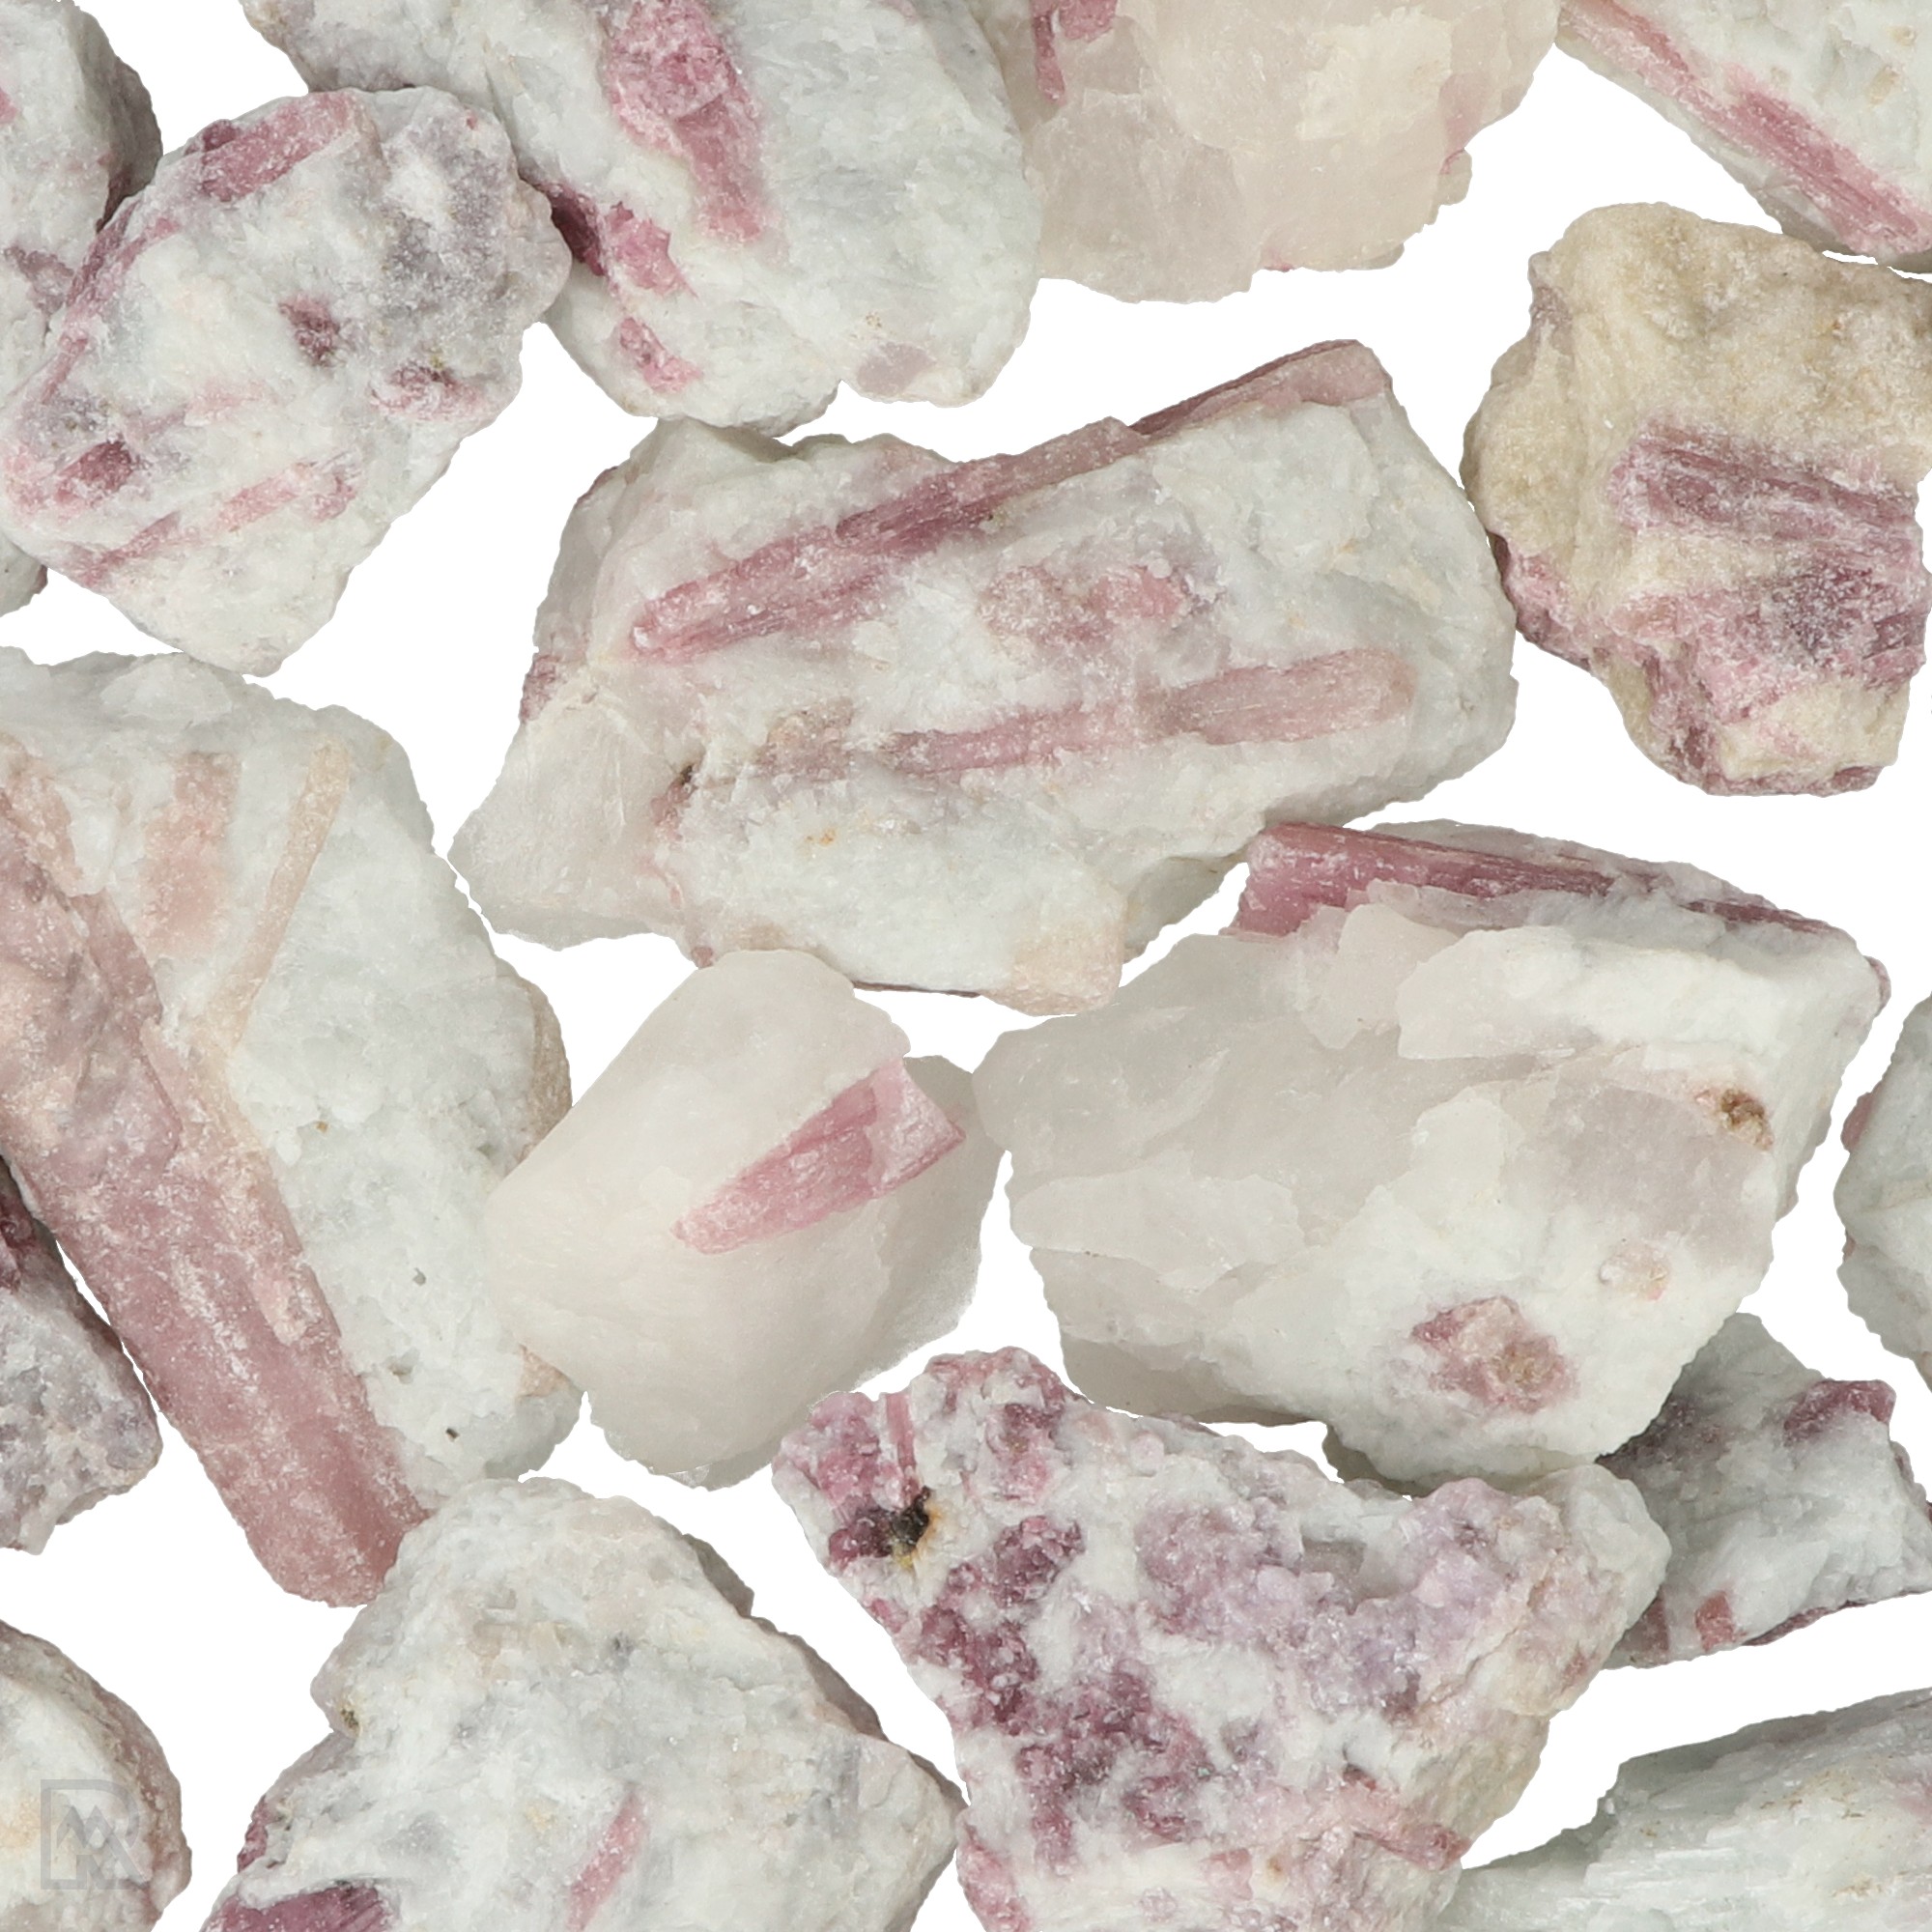 2017_pink-tourmaline-rubellite-in-quartz_zoom